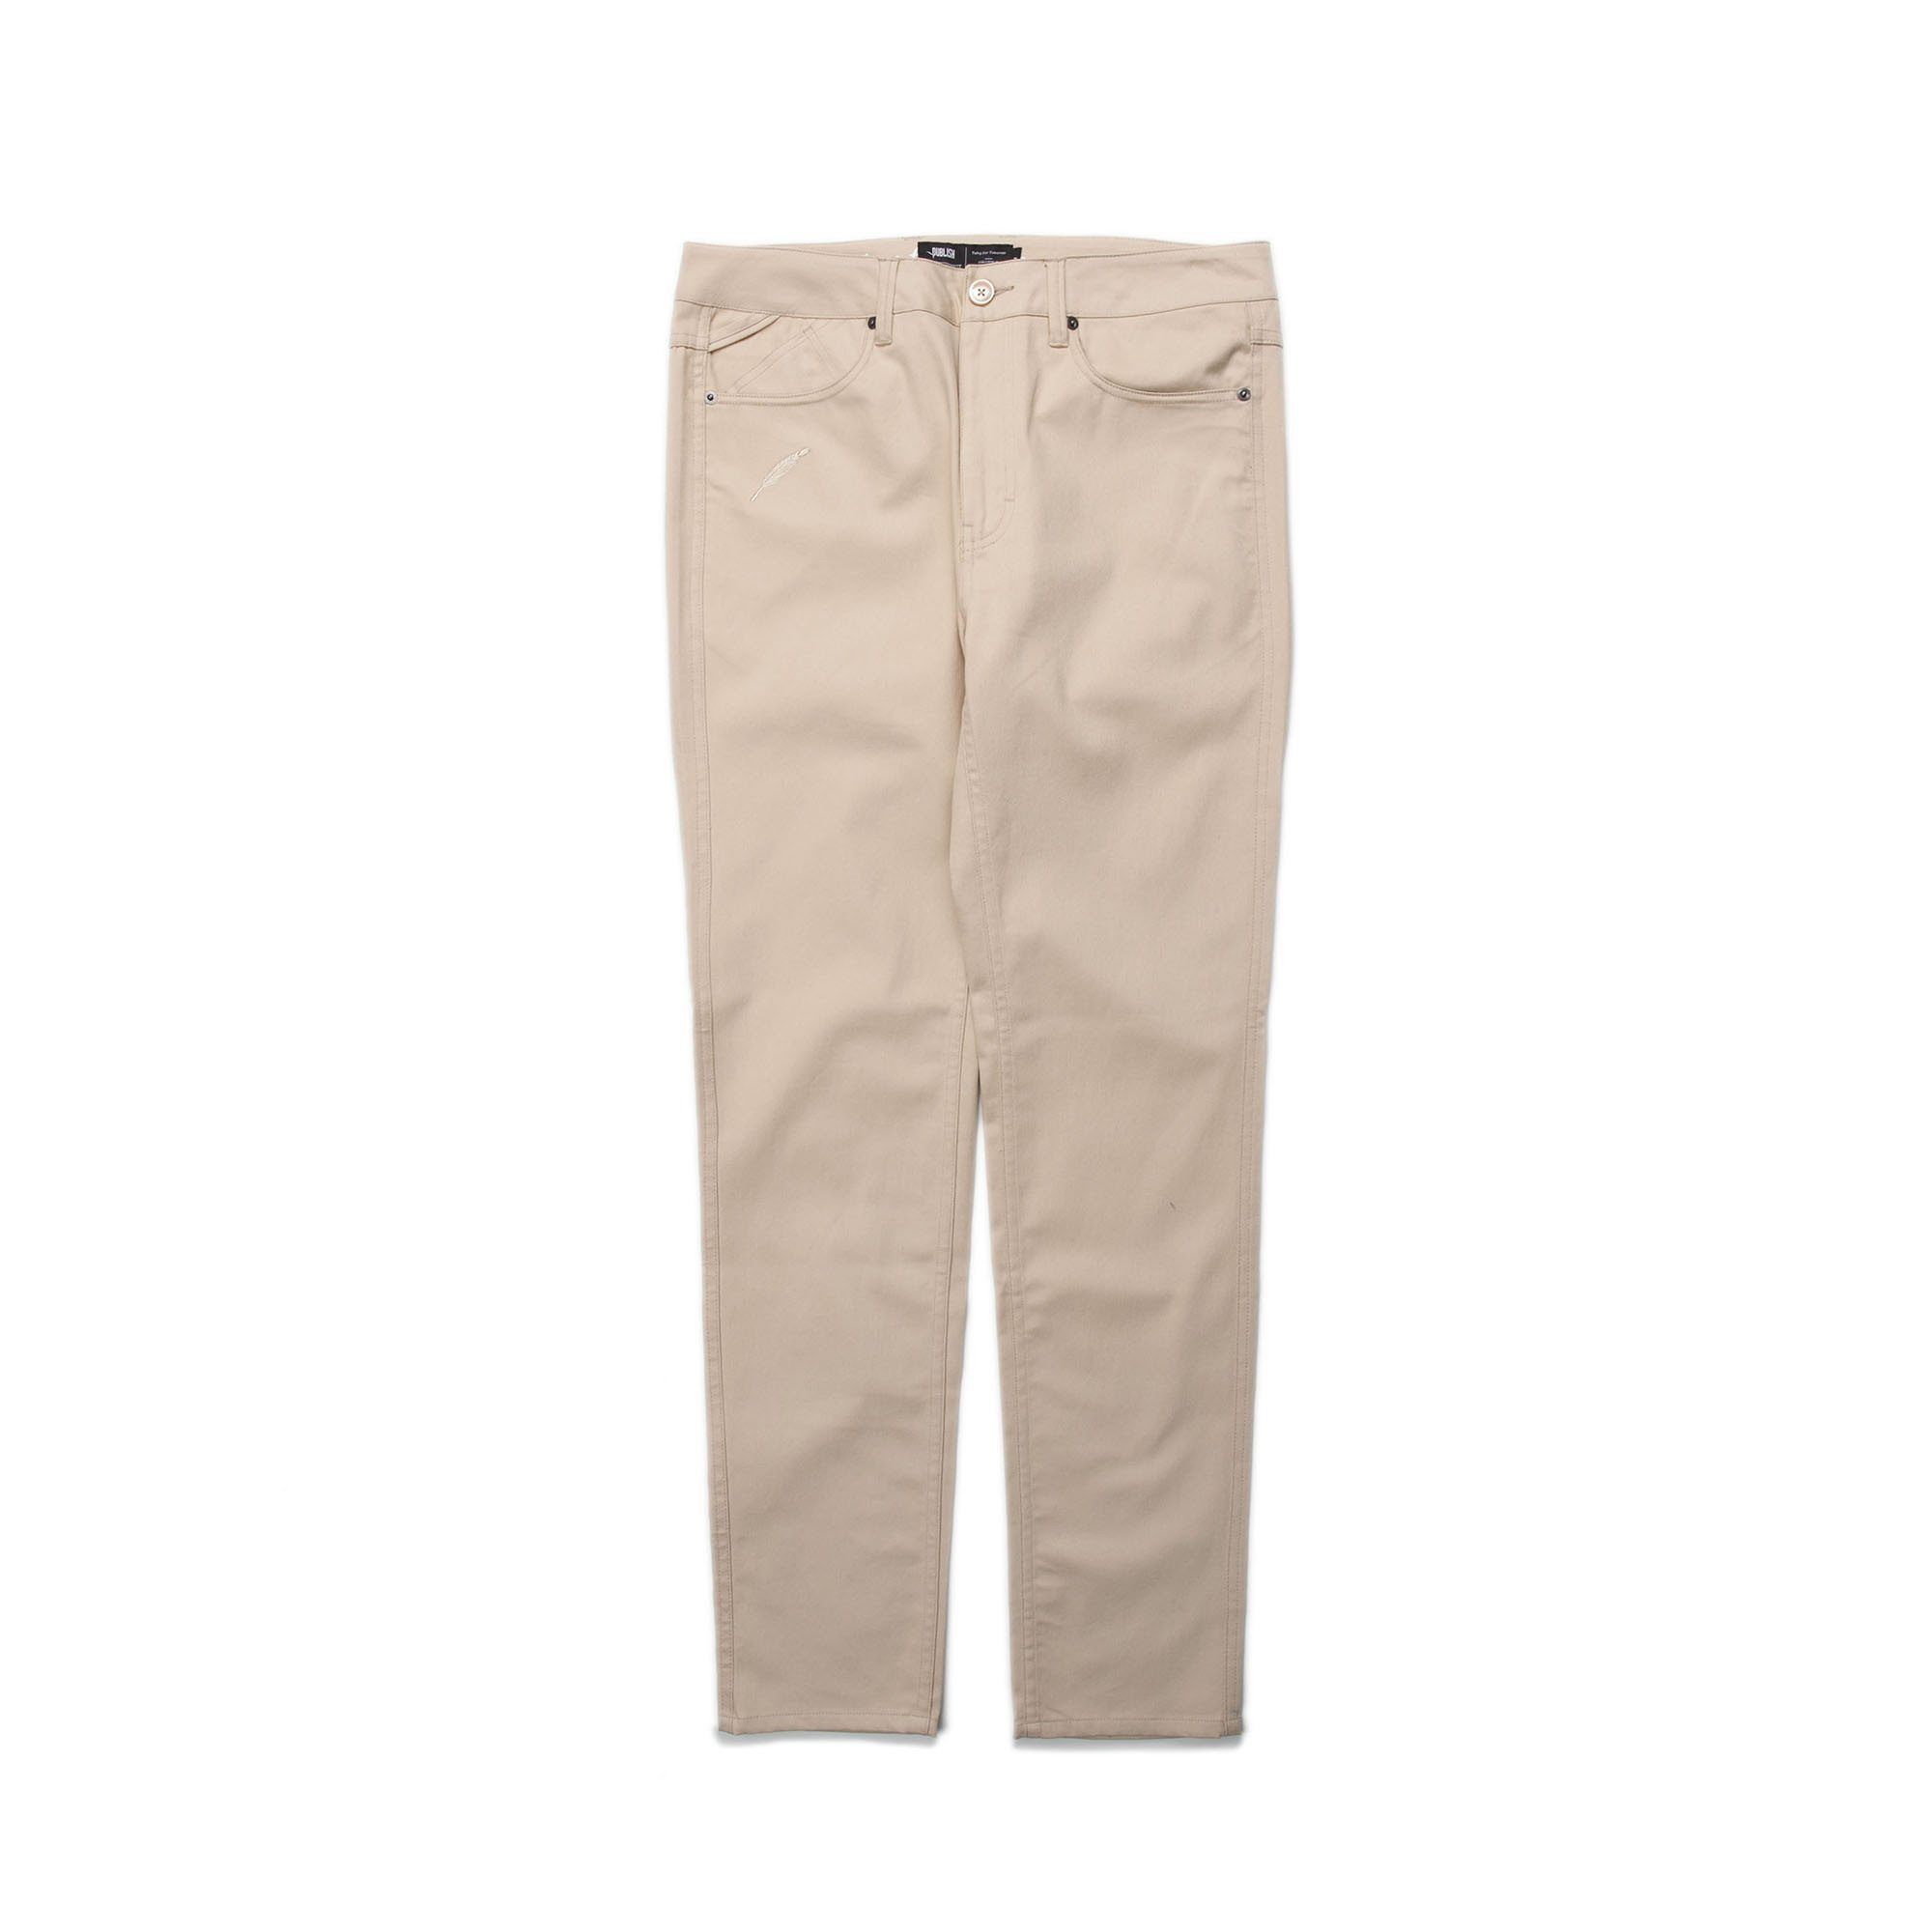 PANTS waist - Publish Index Slim Classic Buttom Khaki Pants waist P1601103-KHA